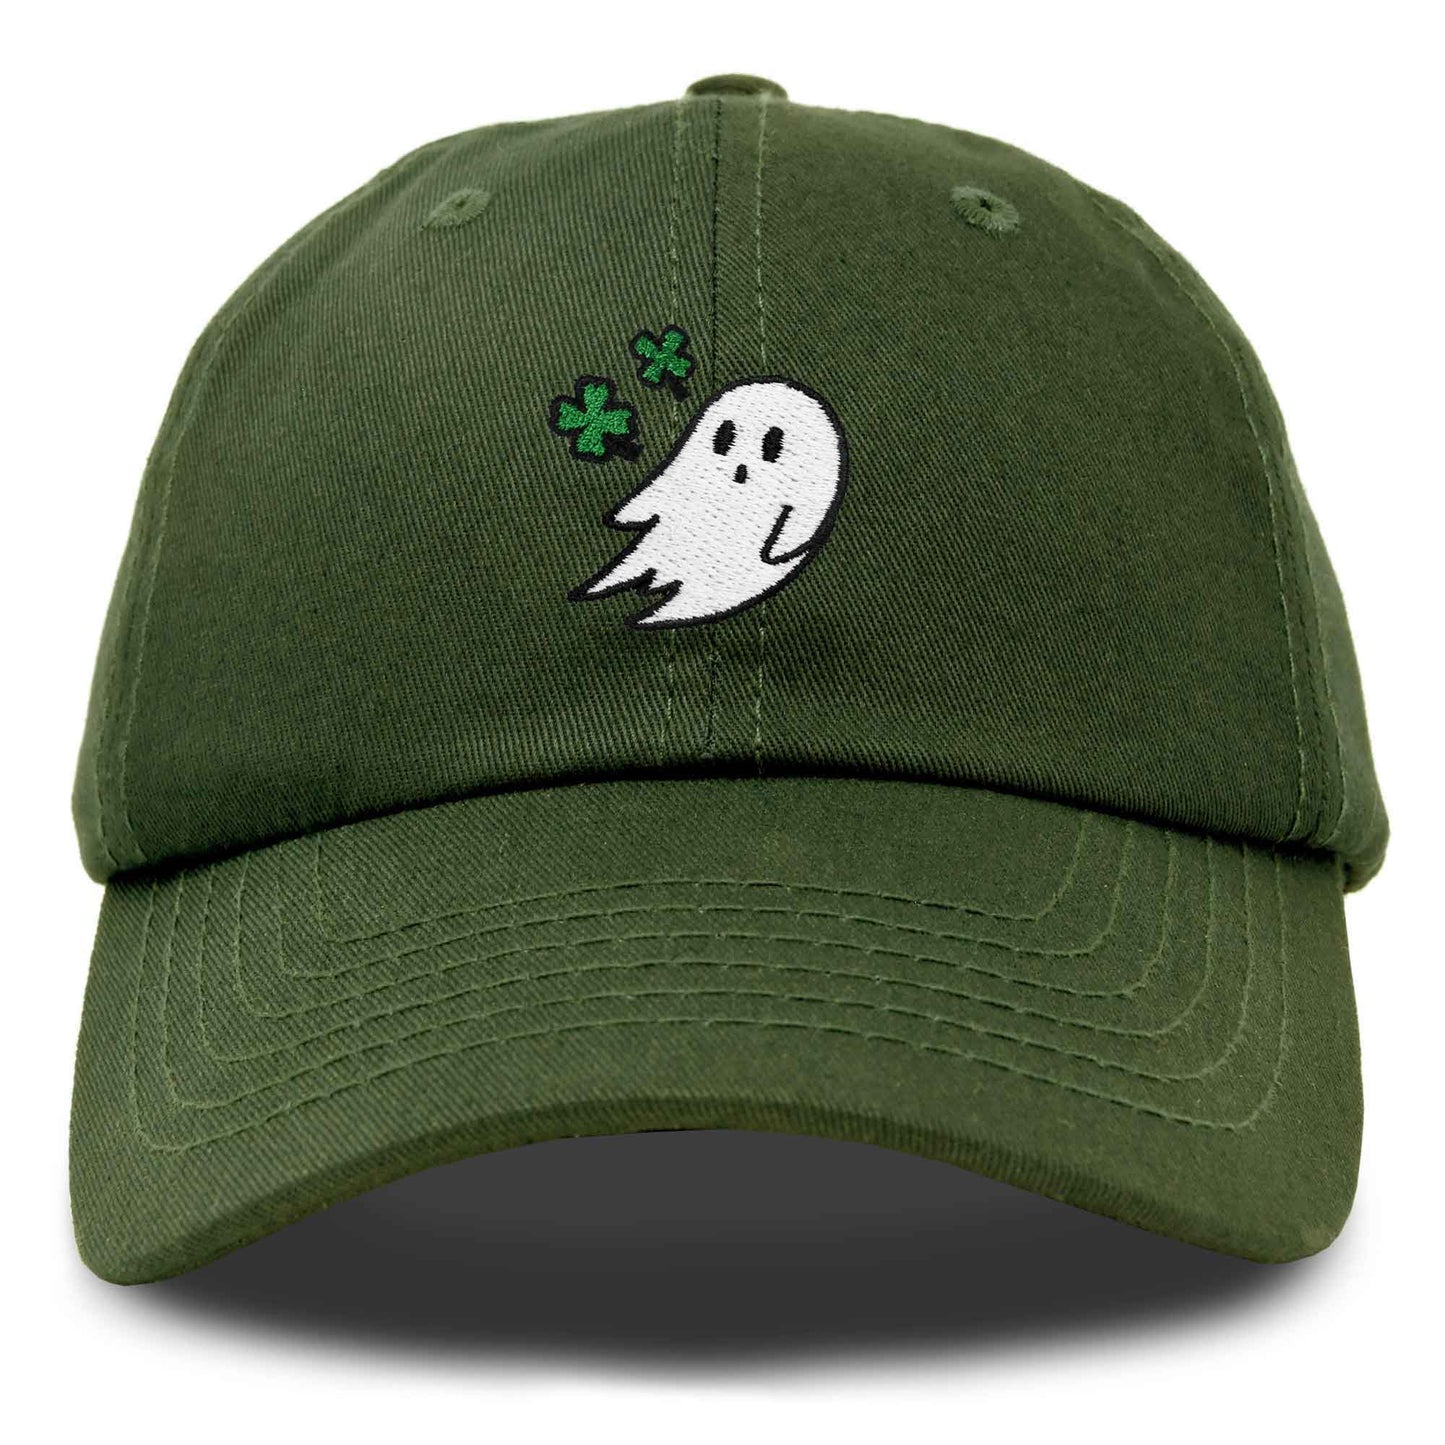 Dalix Cloverly Ghost Dad Hat